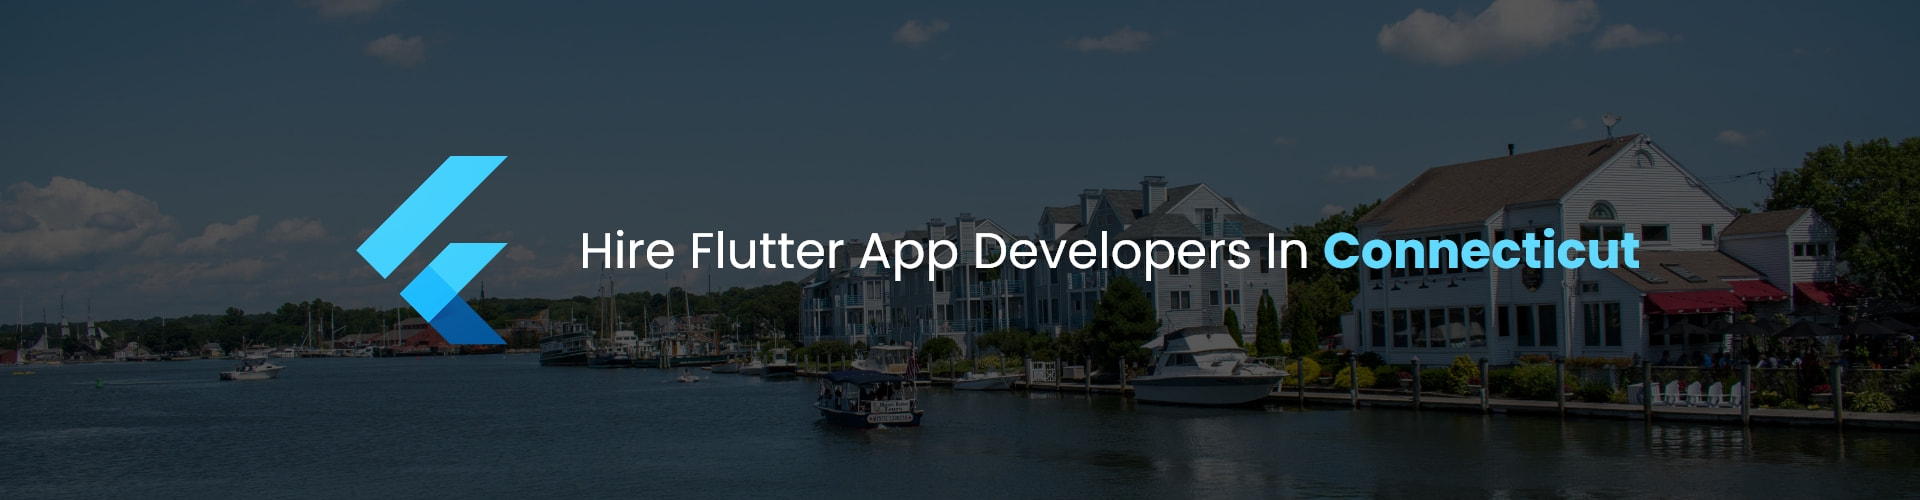 hire flutter app developers in connecticut